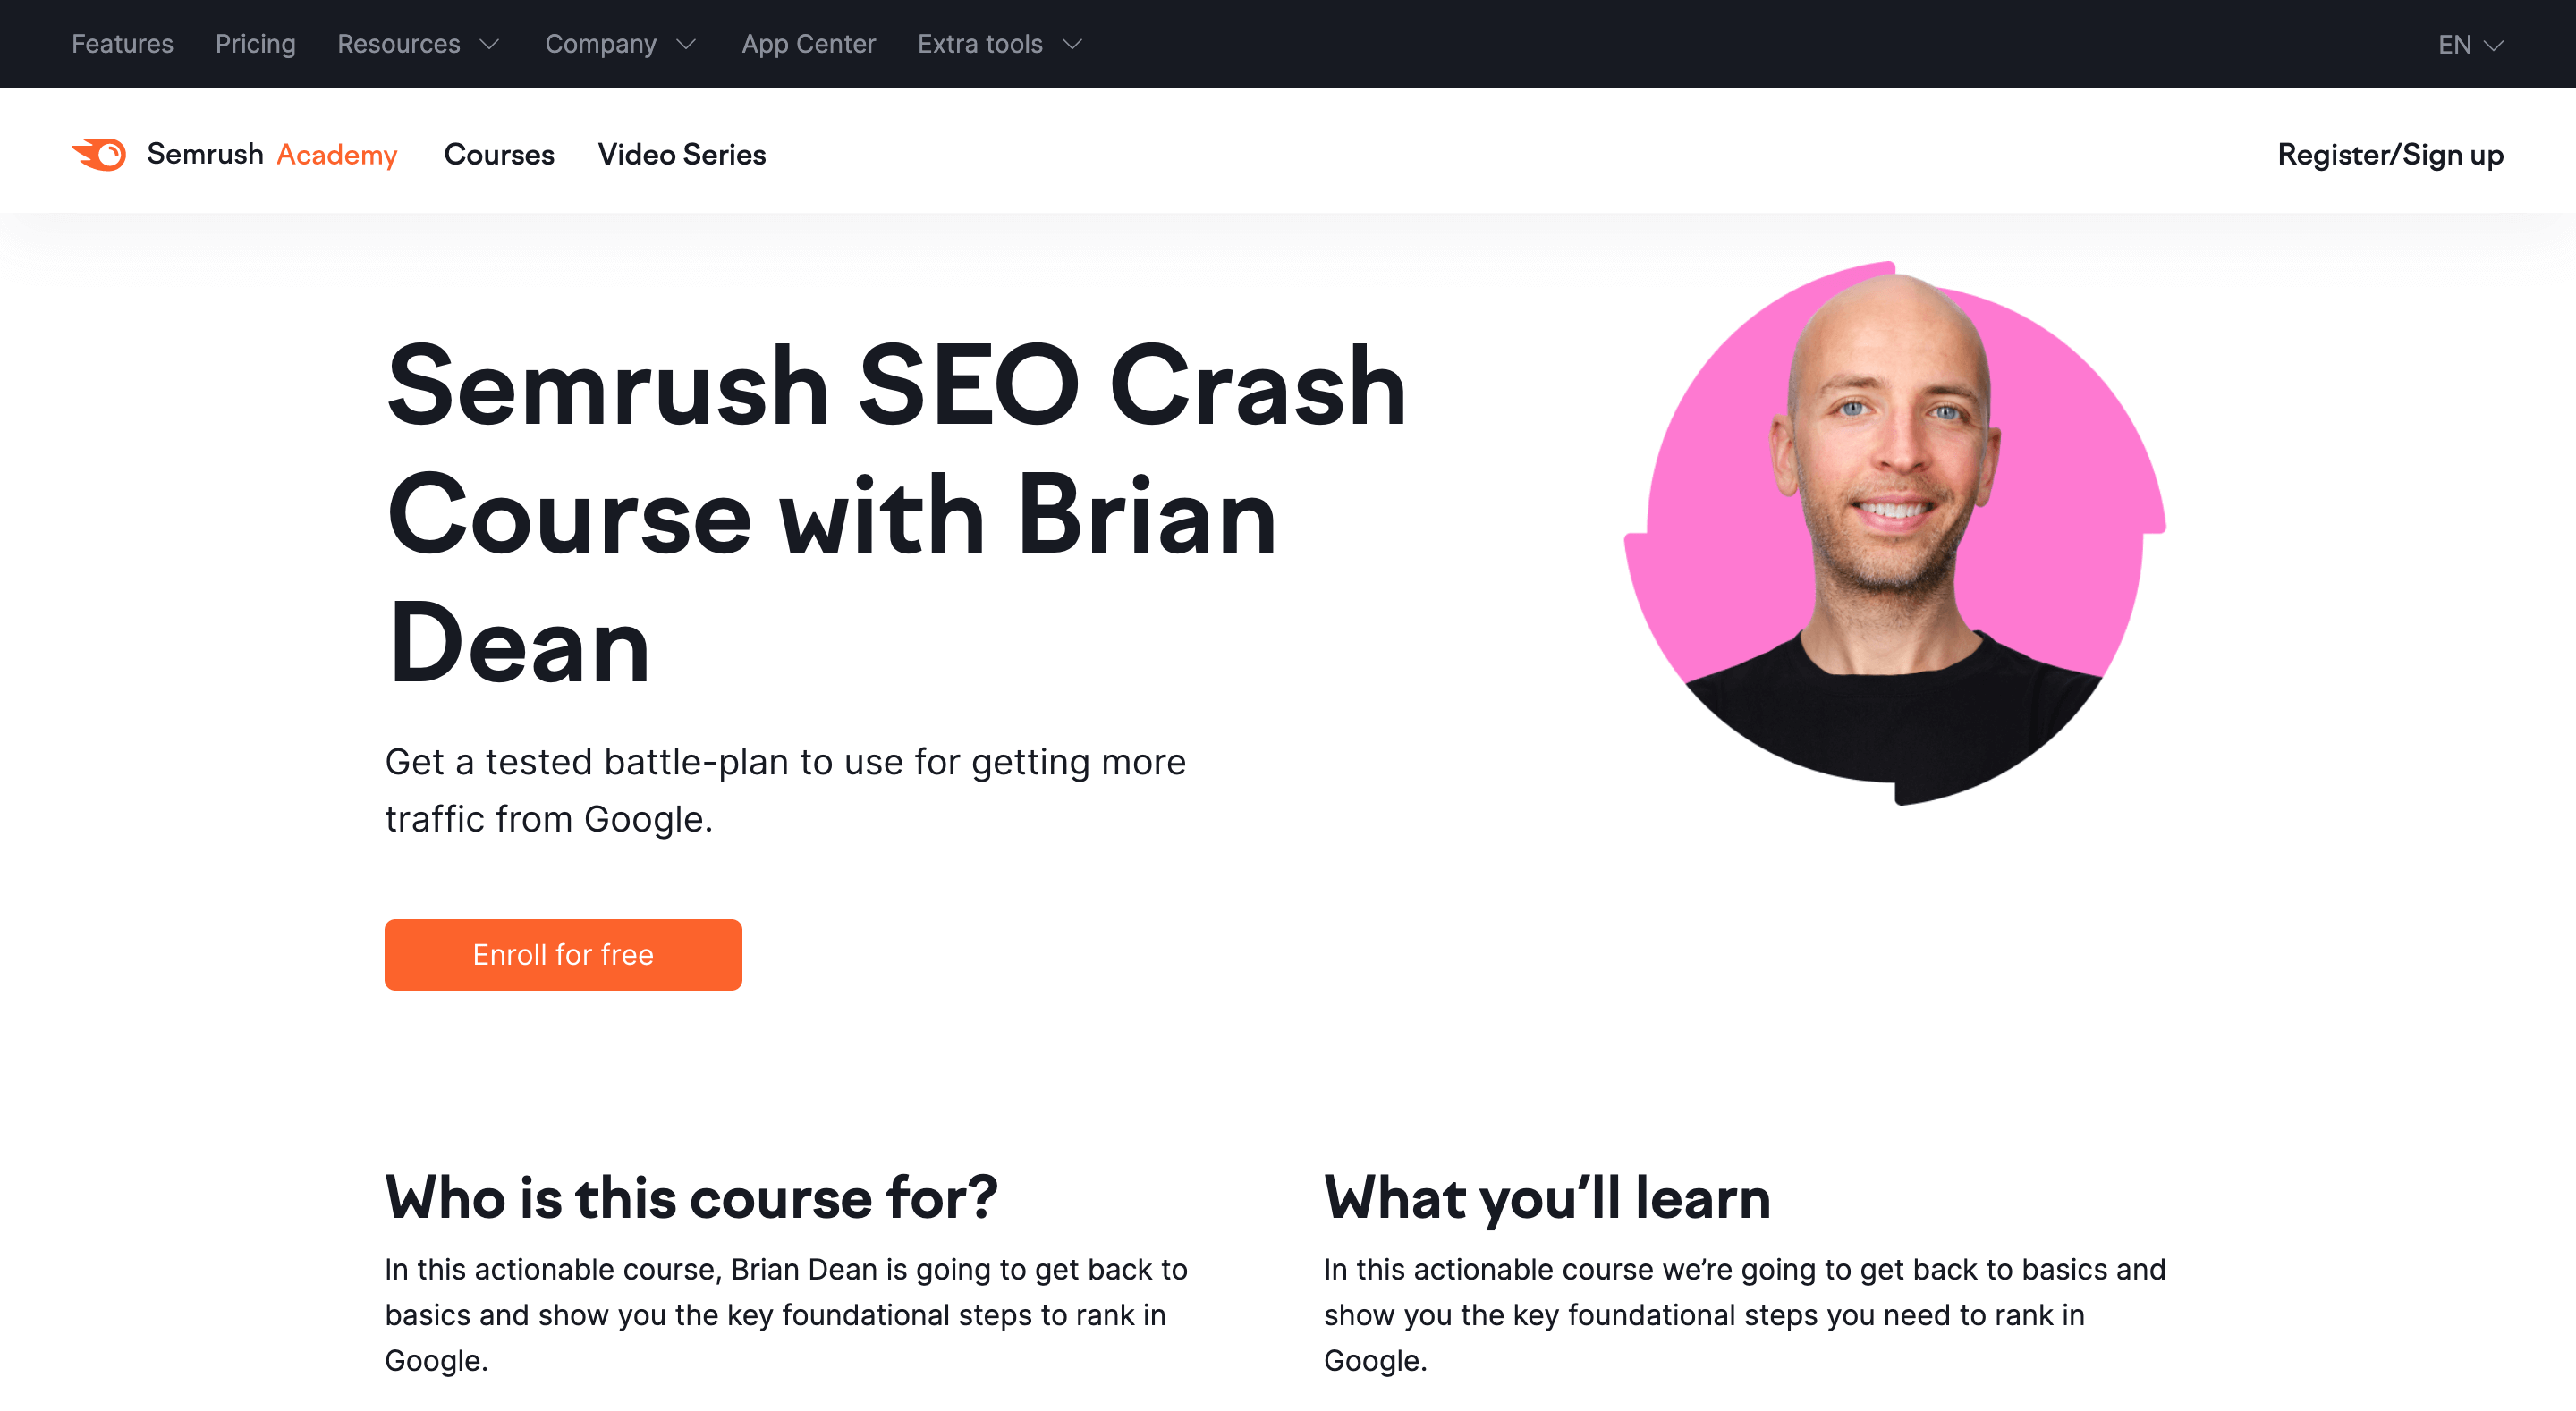 Semrush SEO Crash Course with Brian Dean